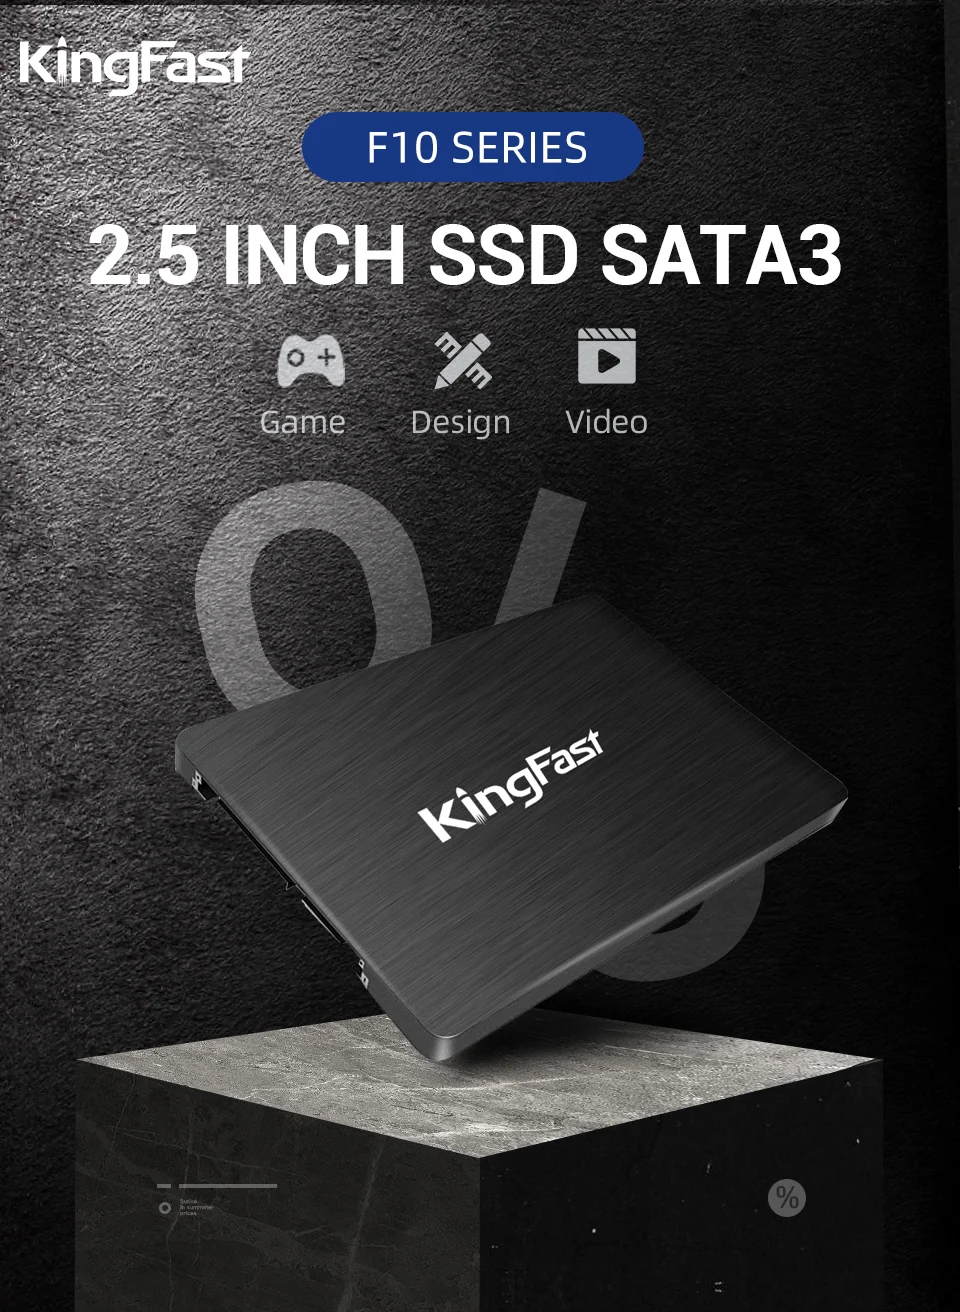 KingFast 2.5 inch SATA 3 240GB 240 GB SATA3 SSD internal solid state hard drive for laptop PC